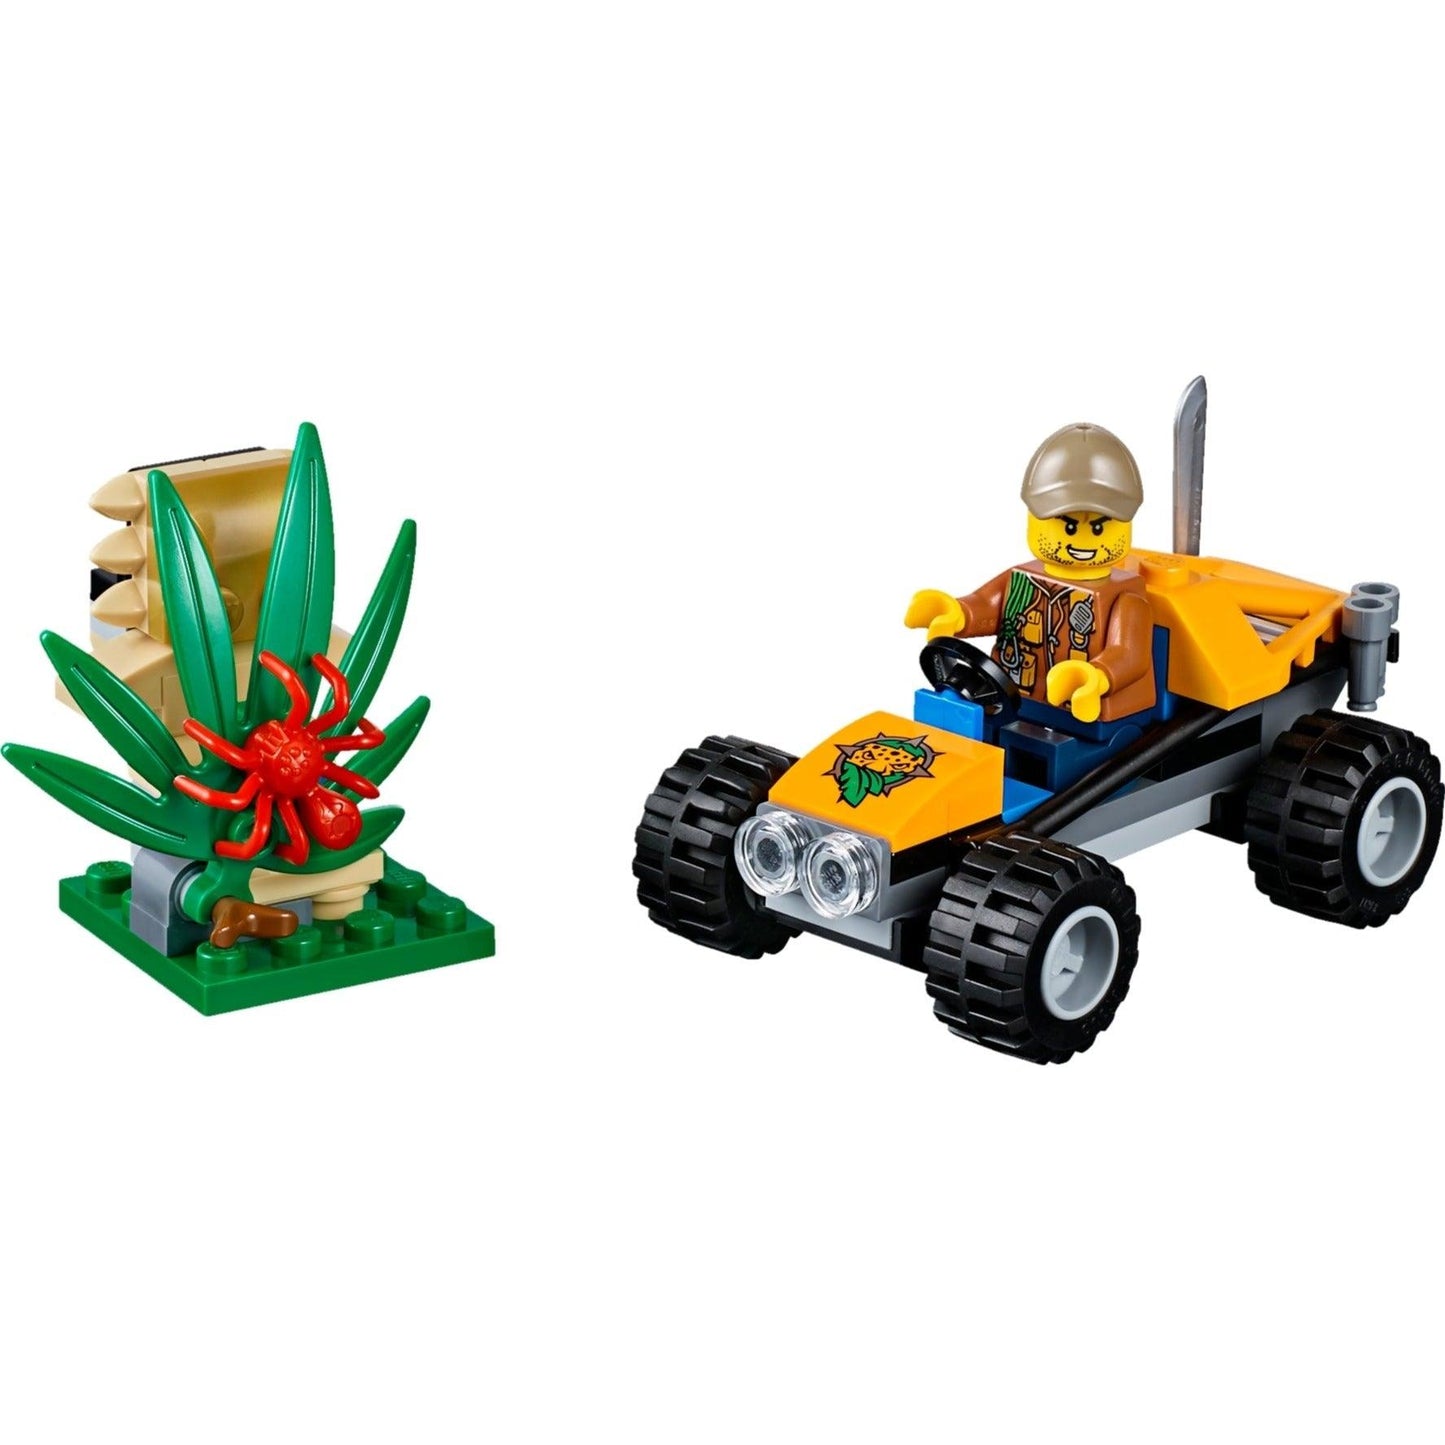 LEGO Jungle Snelle jungle buggy met minifiguur 60156 City | 2TTOYS ✓ Official shop<br>